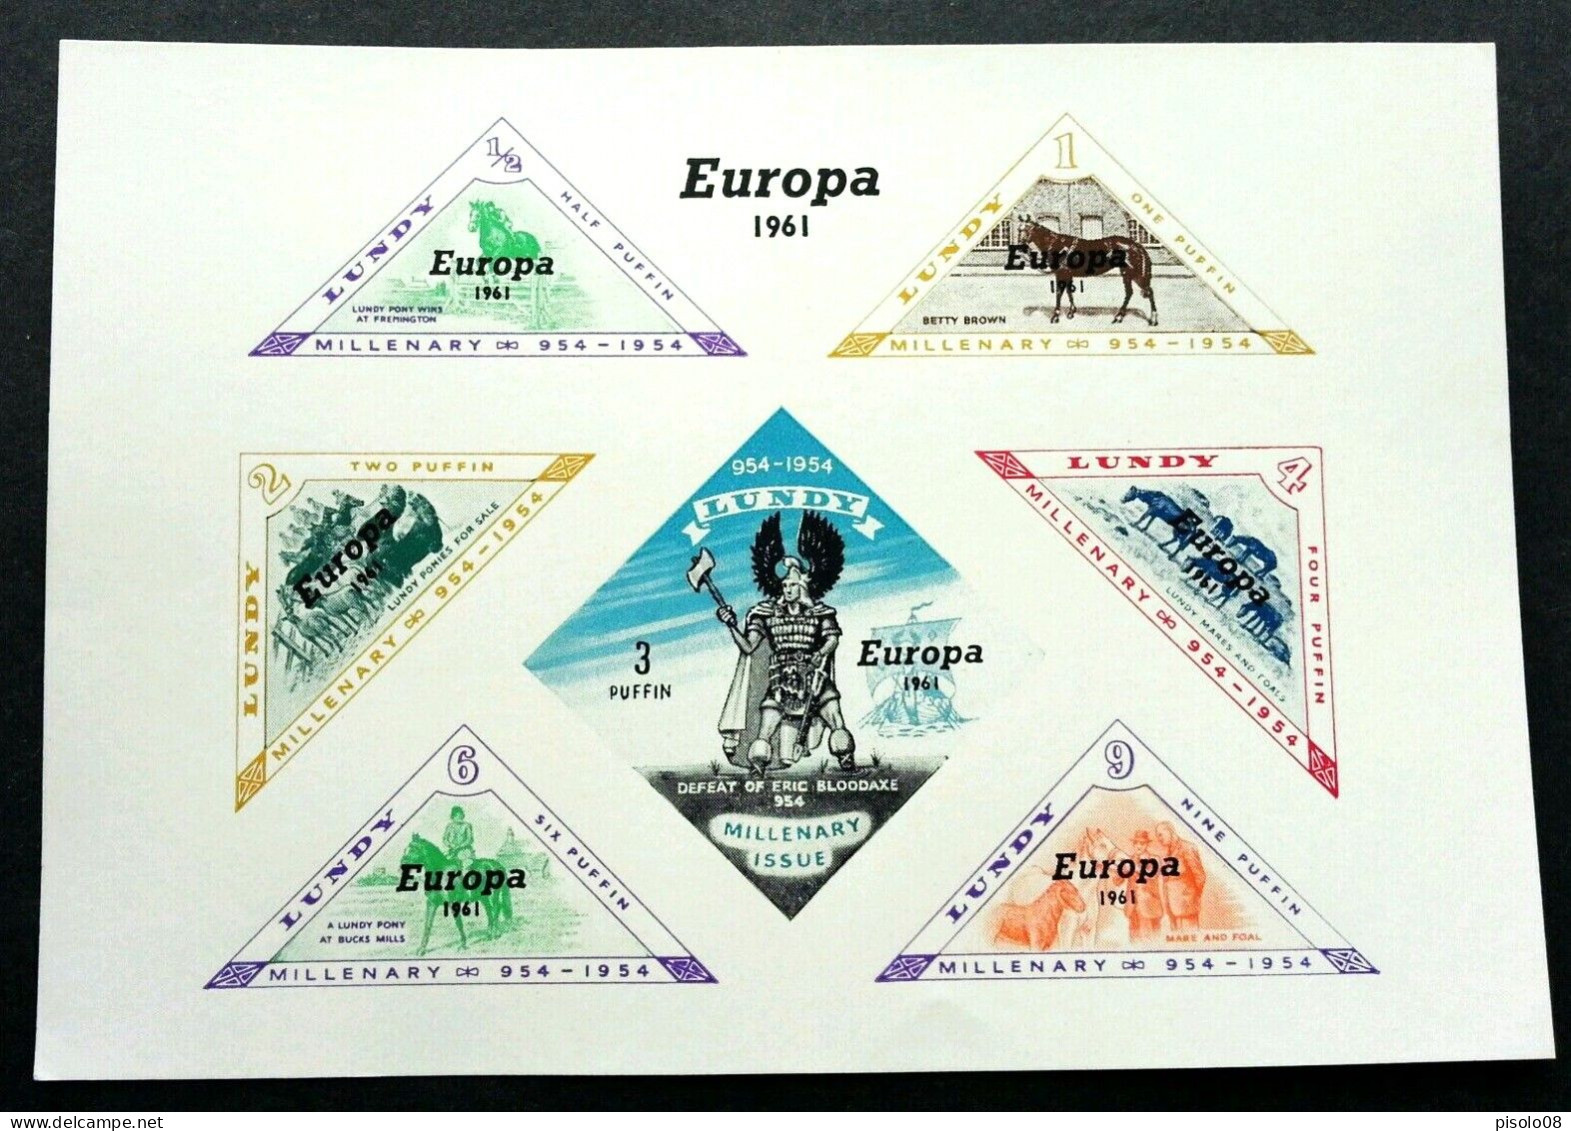 EUROPA JUGOSLAVIA 1961 LUNDY MILLENARY 954-1954 FOGLIETTO - Blocks & Kleinbögen